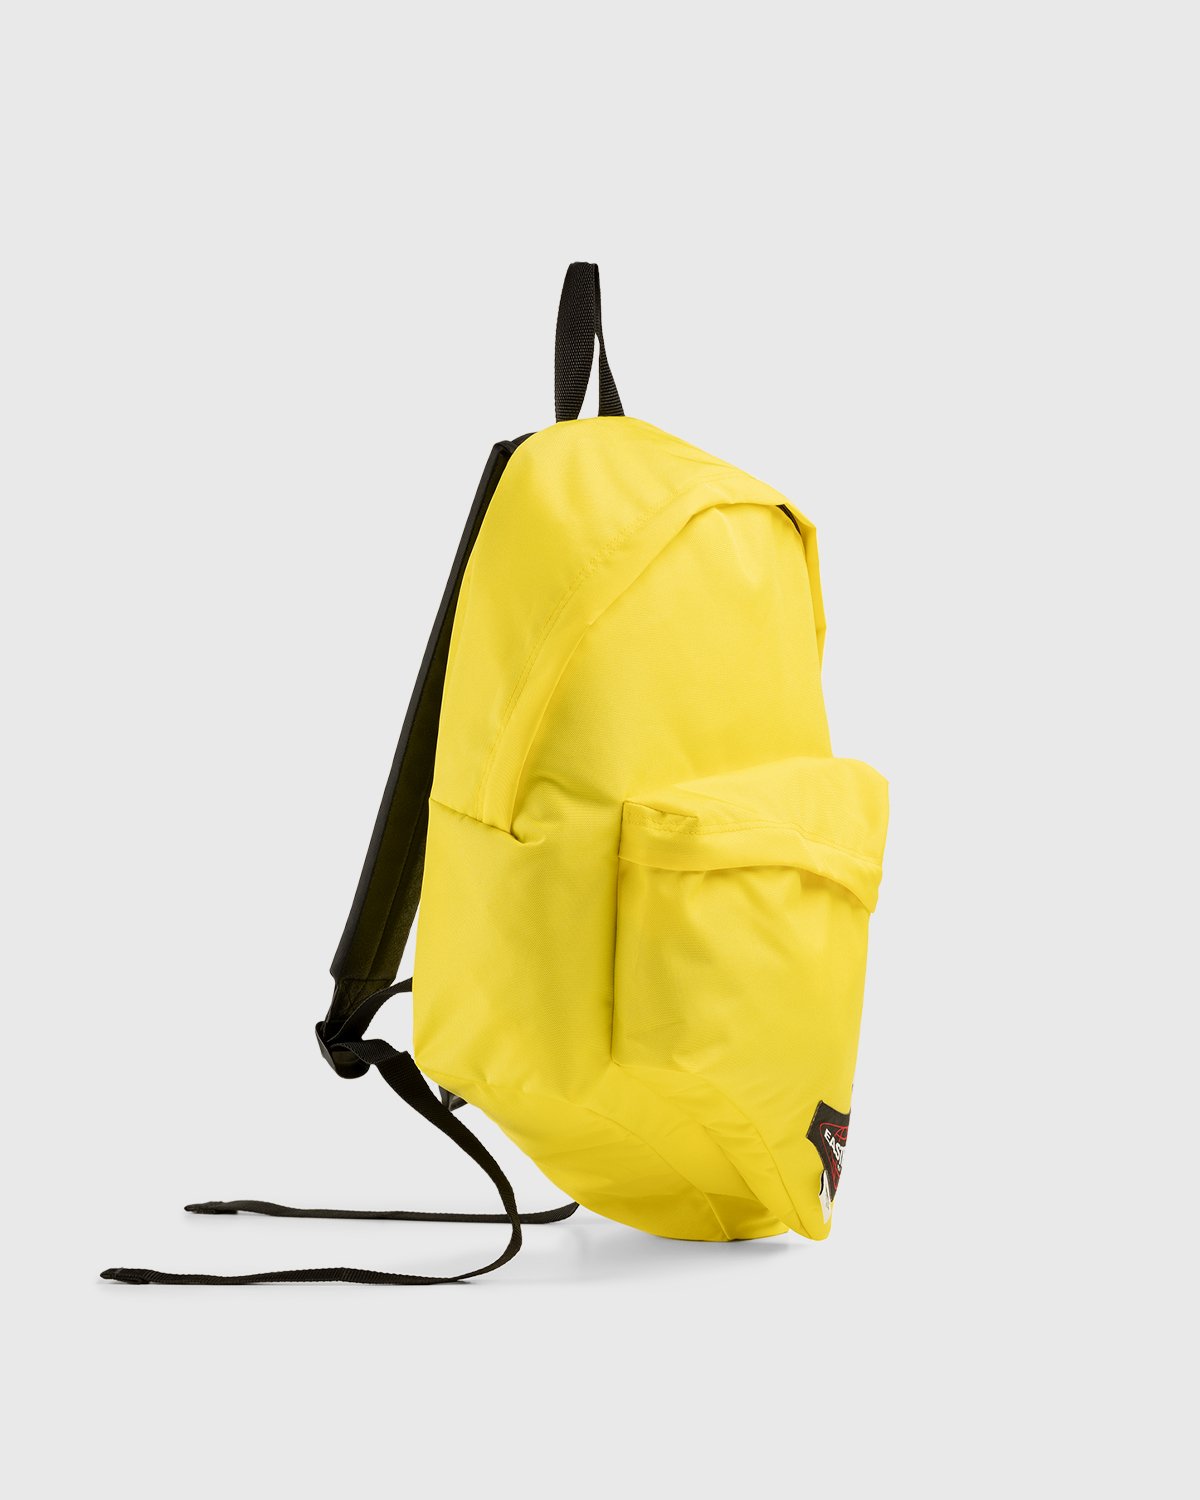 MM6 Maison Margiela x Eastpak - Zaino Backpack Yellow - Accessories - Yellow - Image 2